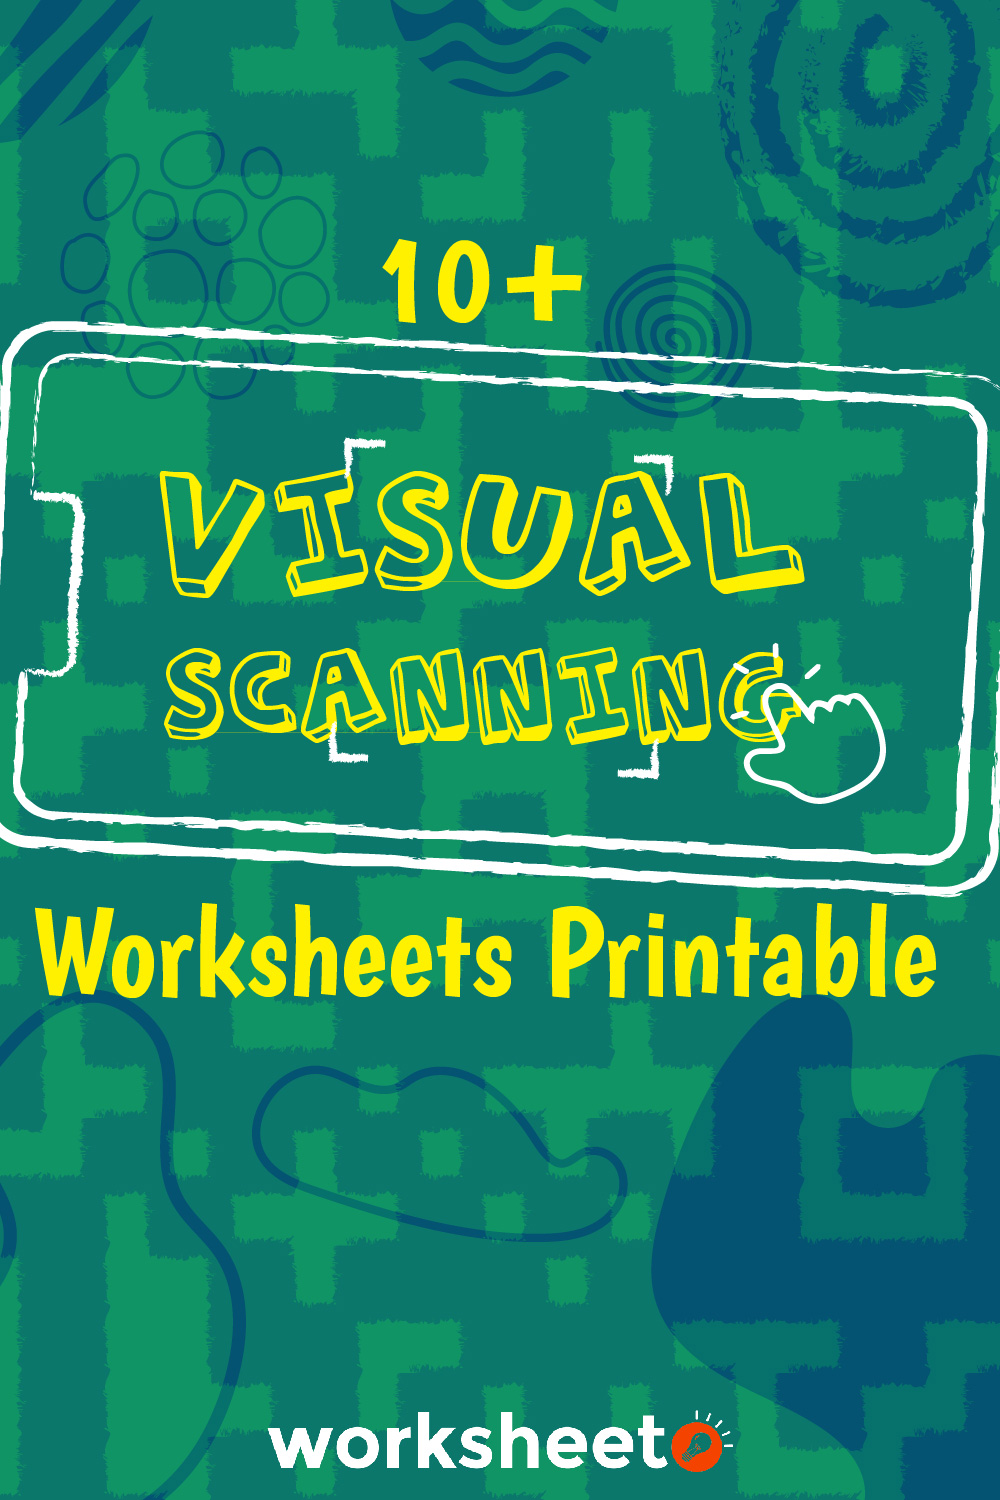 10 Images of Visual Scanning Worksheets Printable